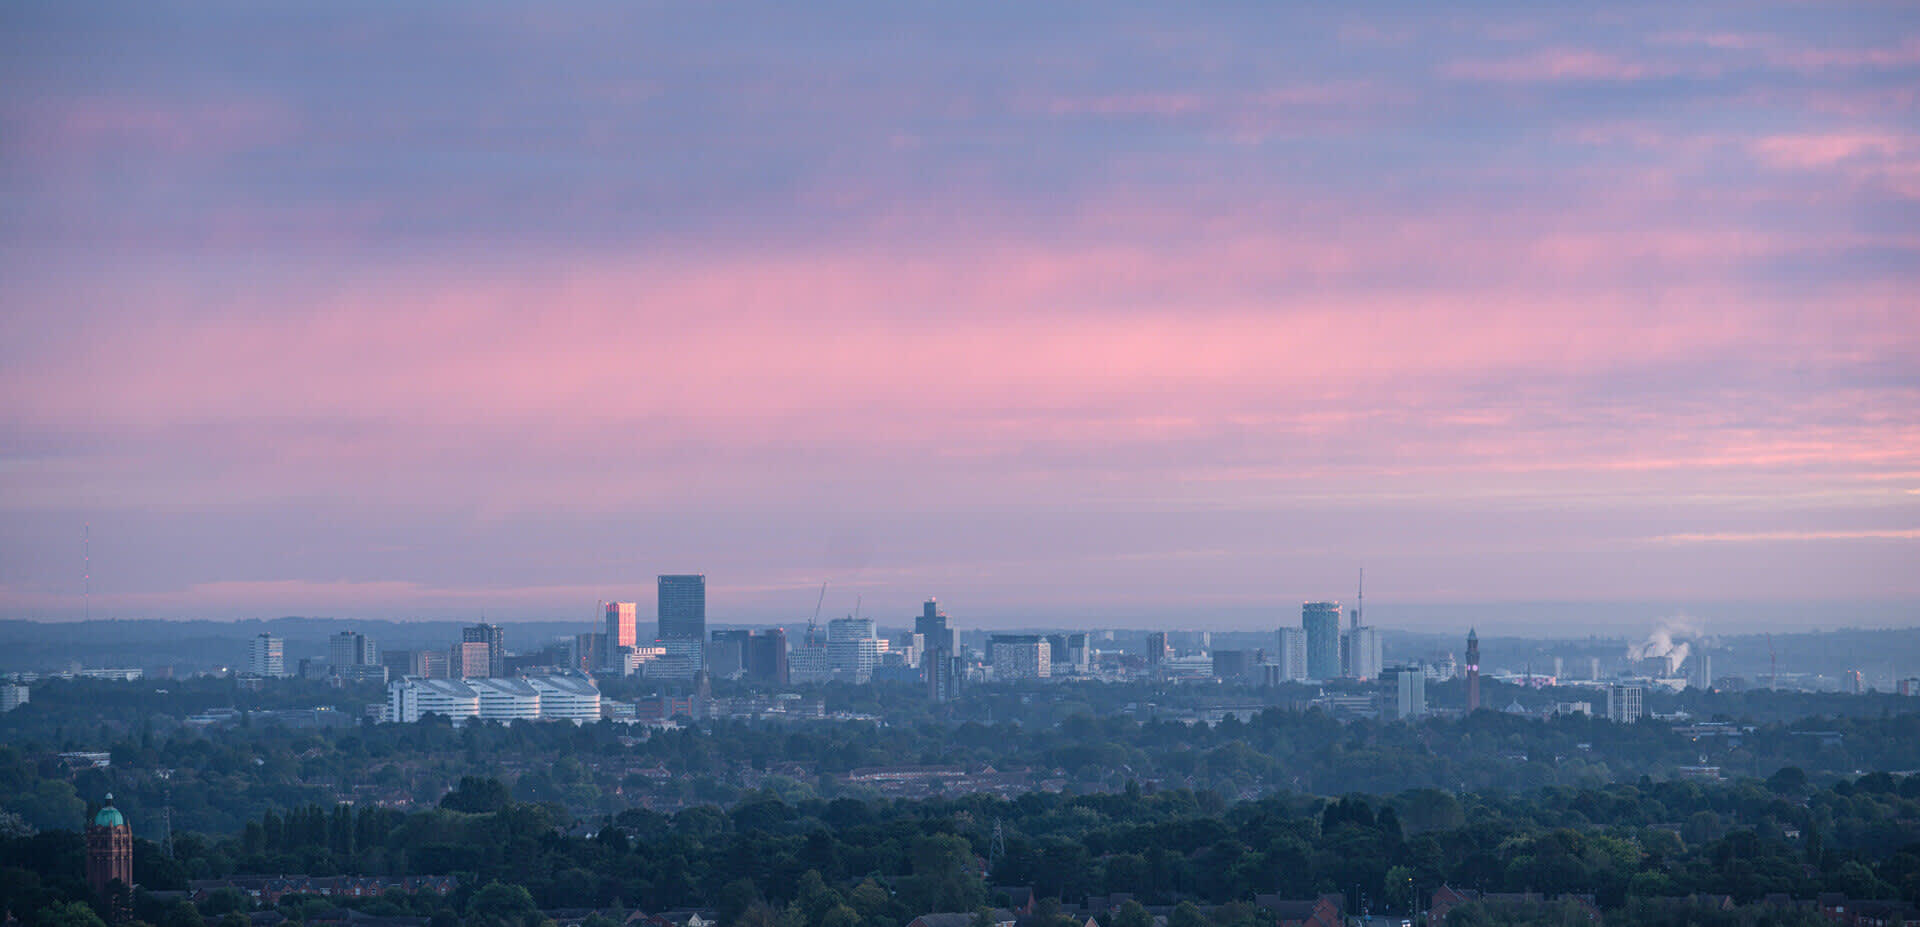 The Birmingham skyline in the far distance below a purple evening sky